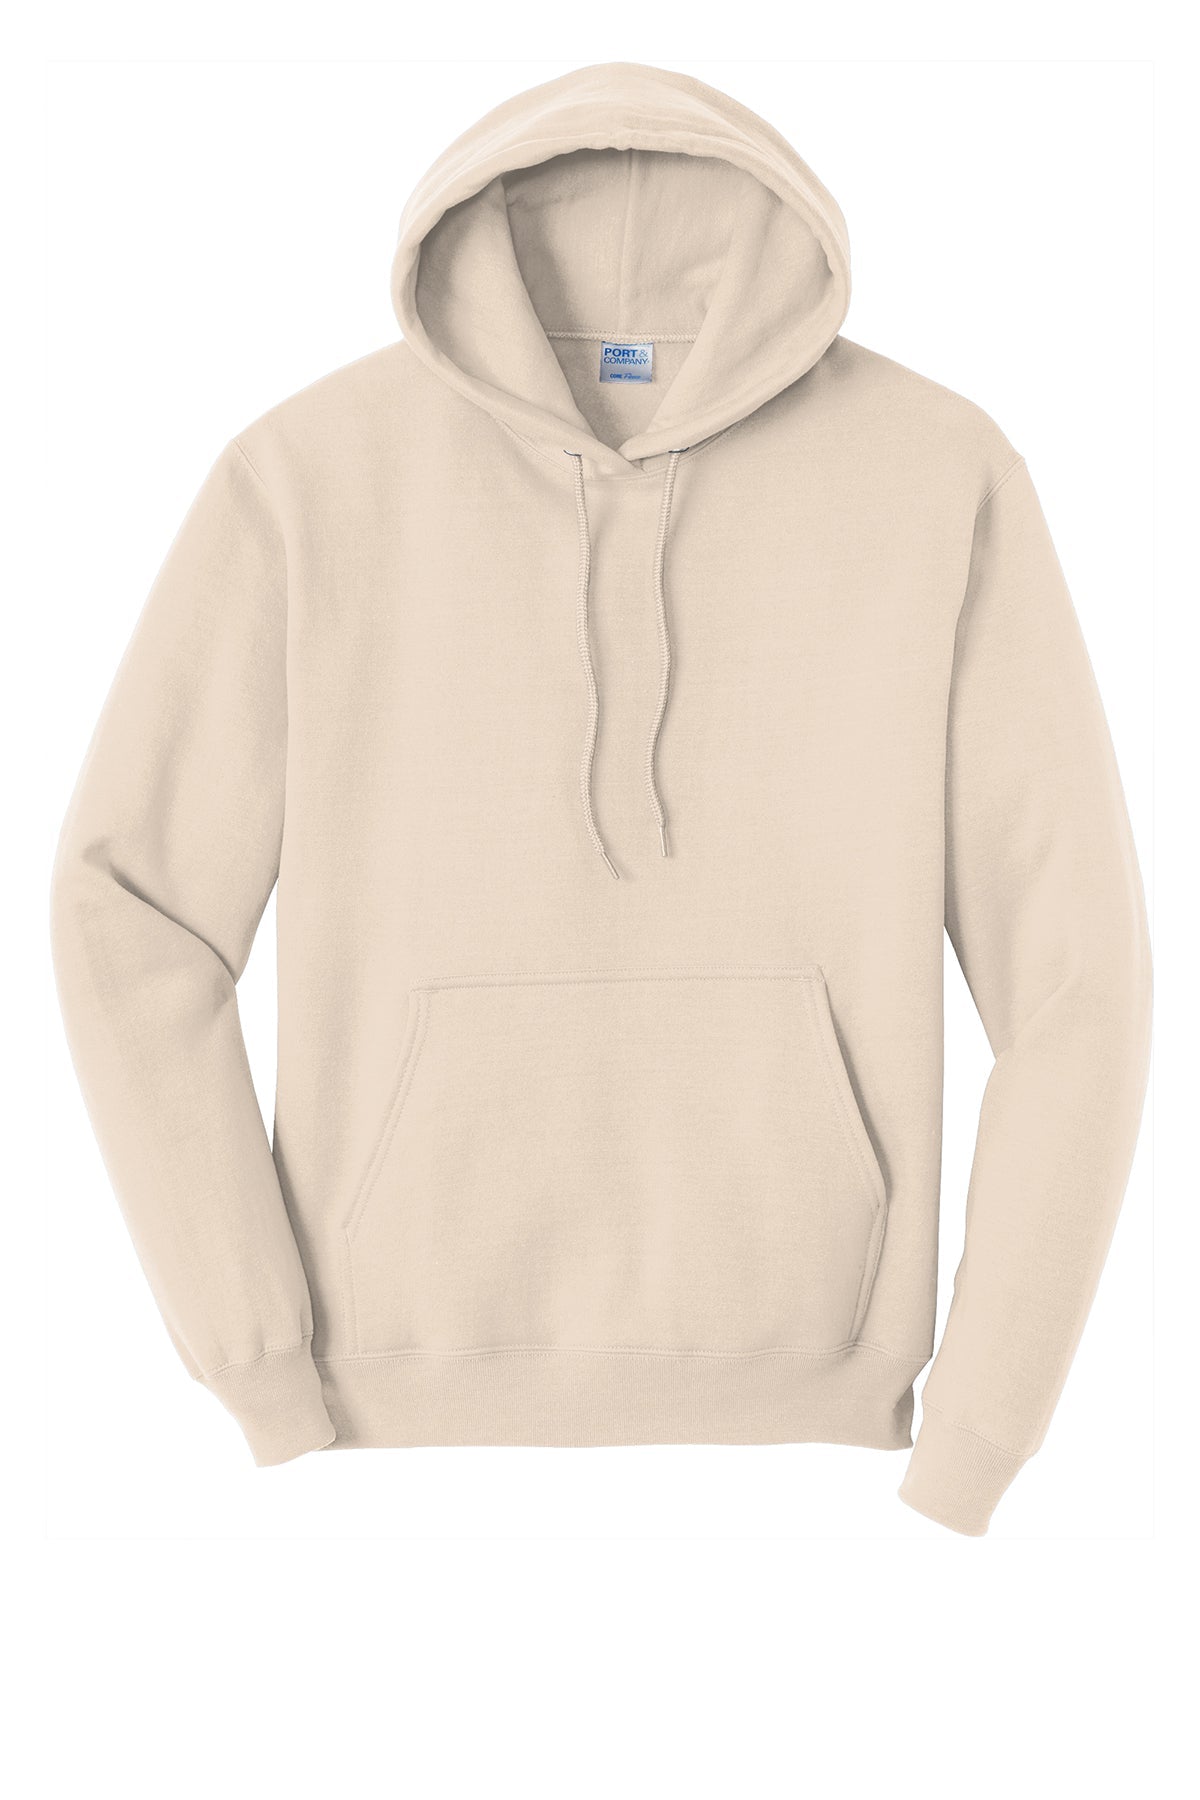 PC78H Port & Company® Core Fleece Pullover Hooded Sweatshirt. S-4XL